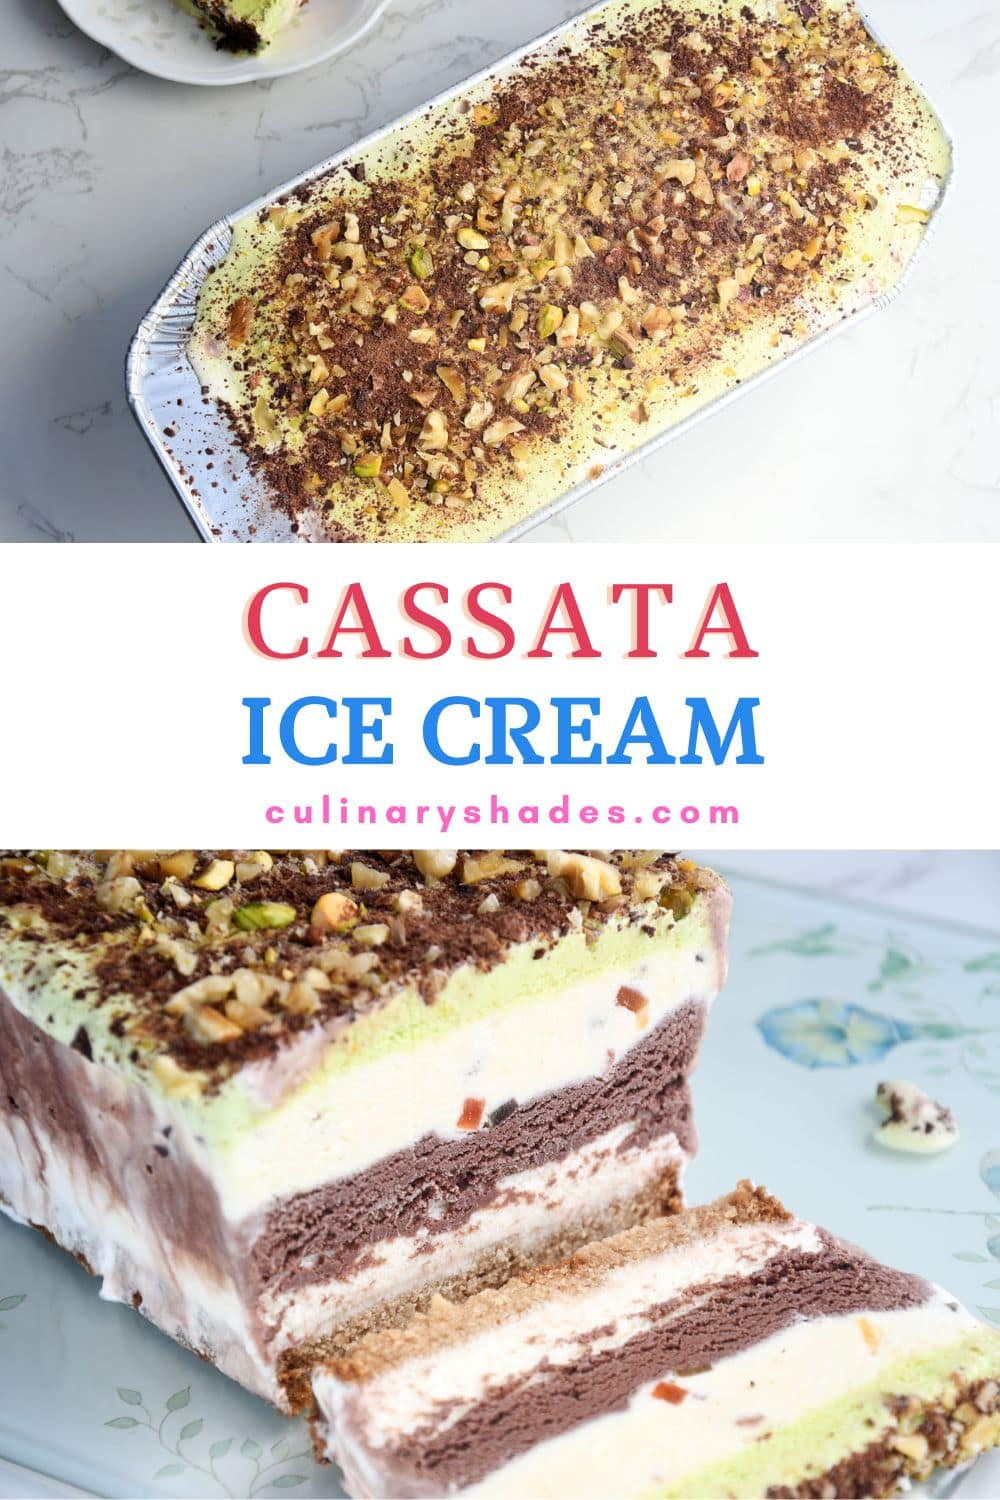 Cassata ice cream brick and slice on cheese board.